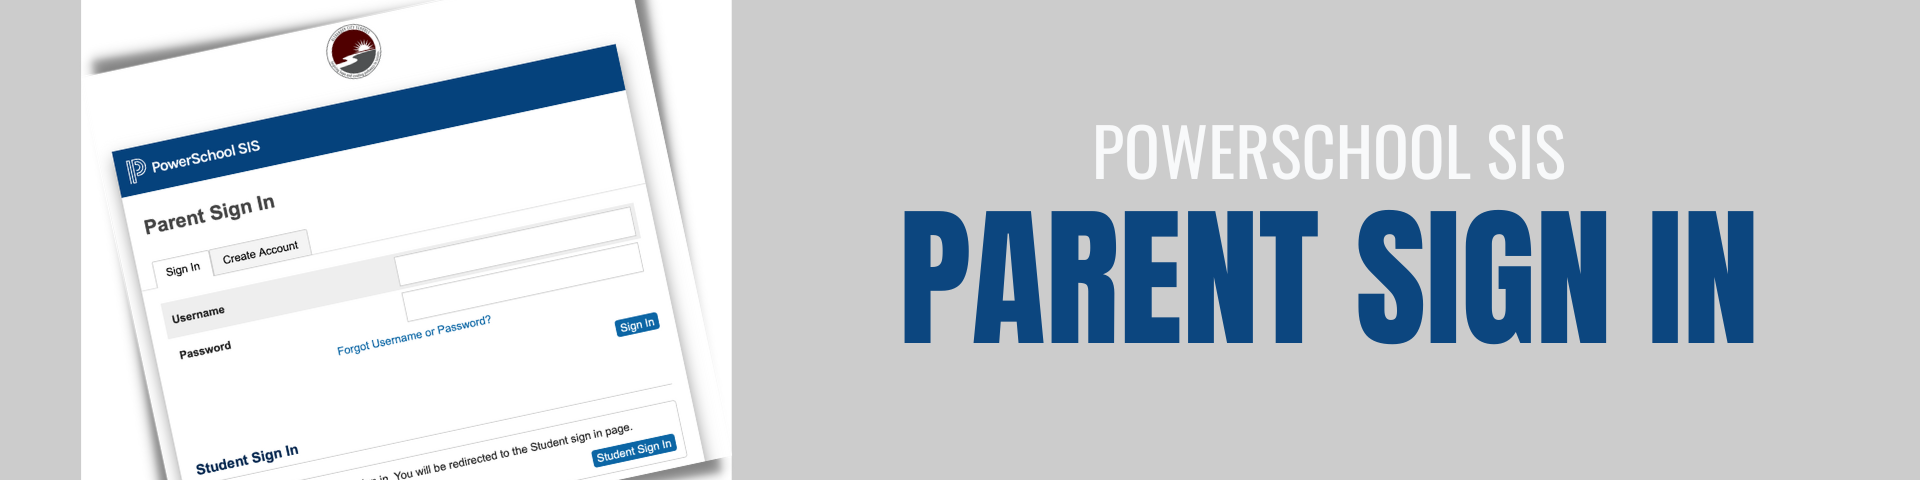 Power School Parent Sign in Graphic 